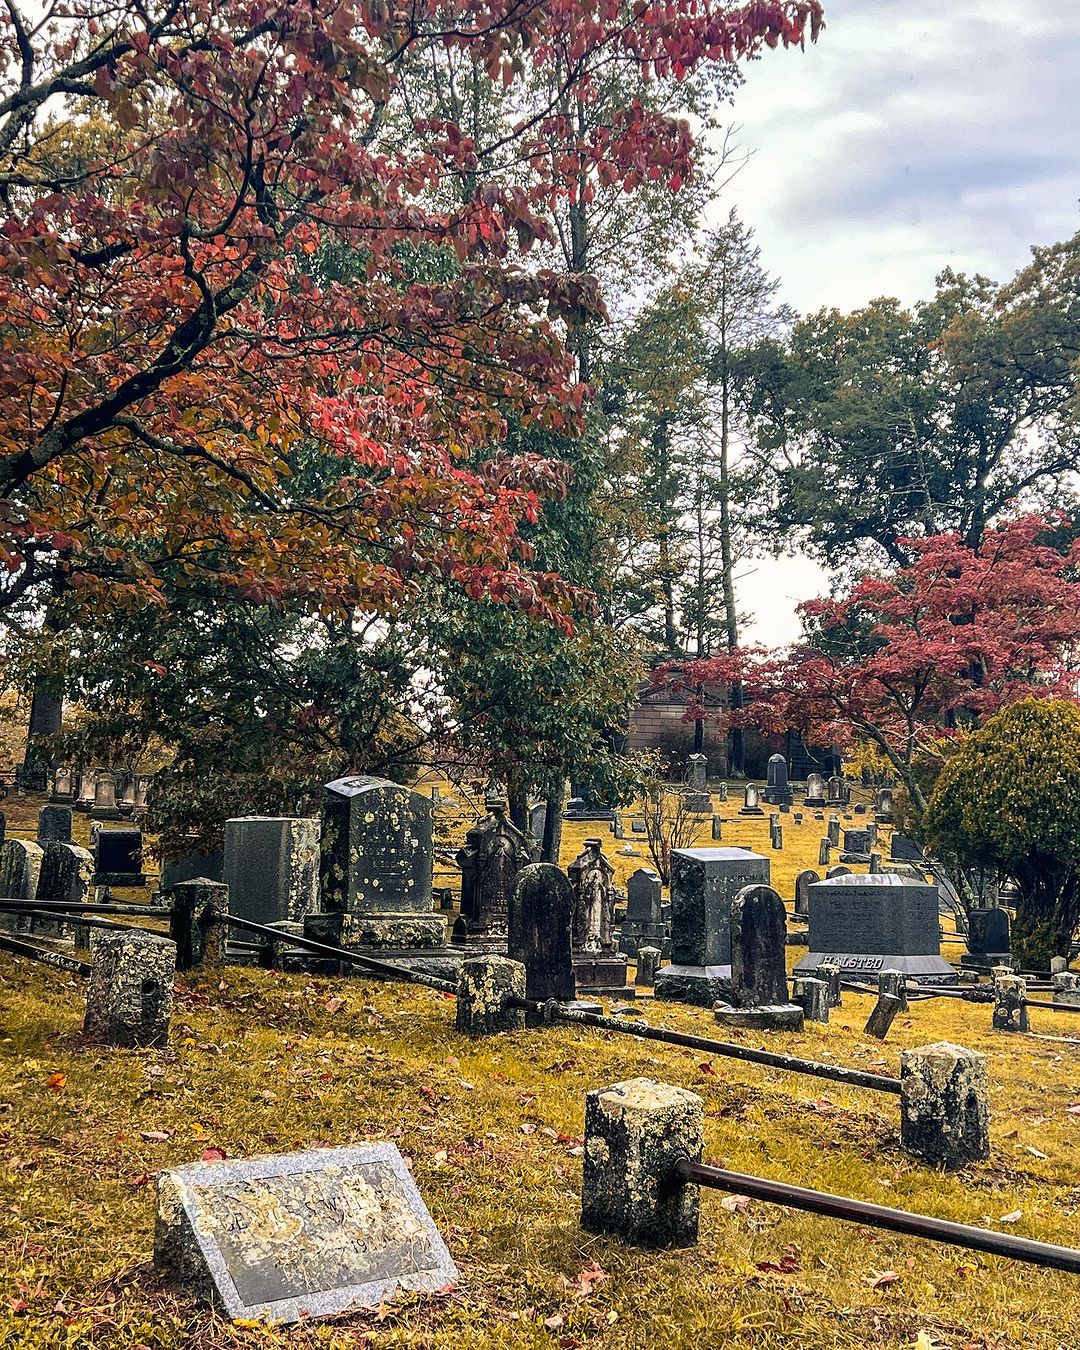 Sleepy Hollow Cemetery